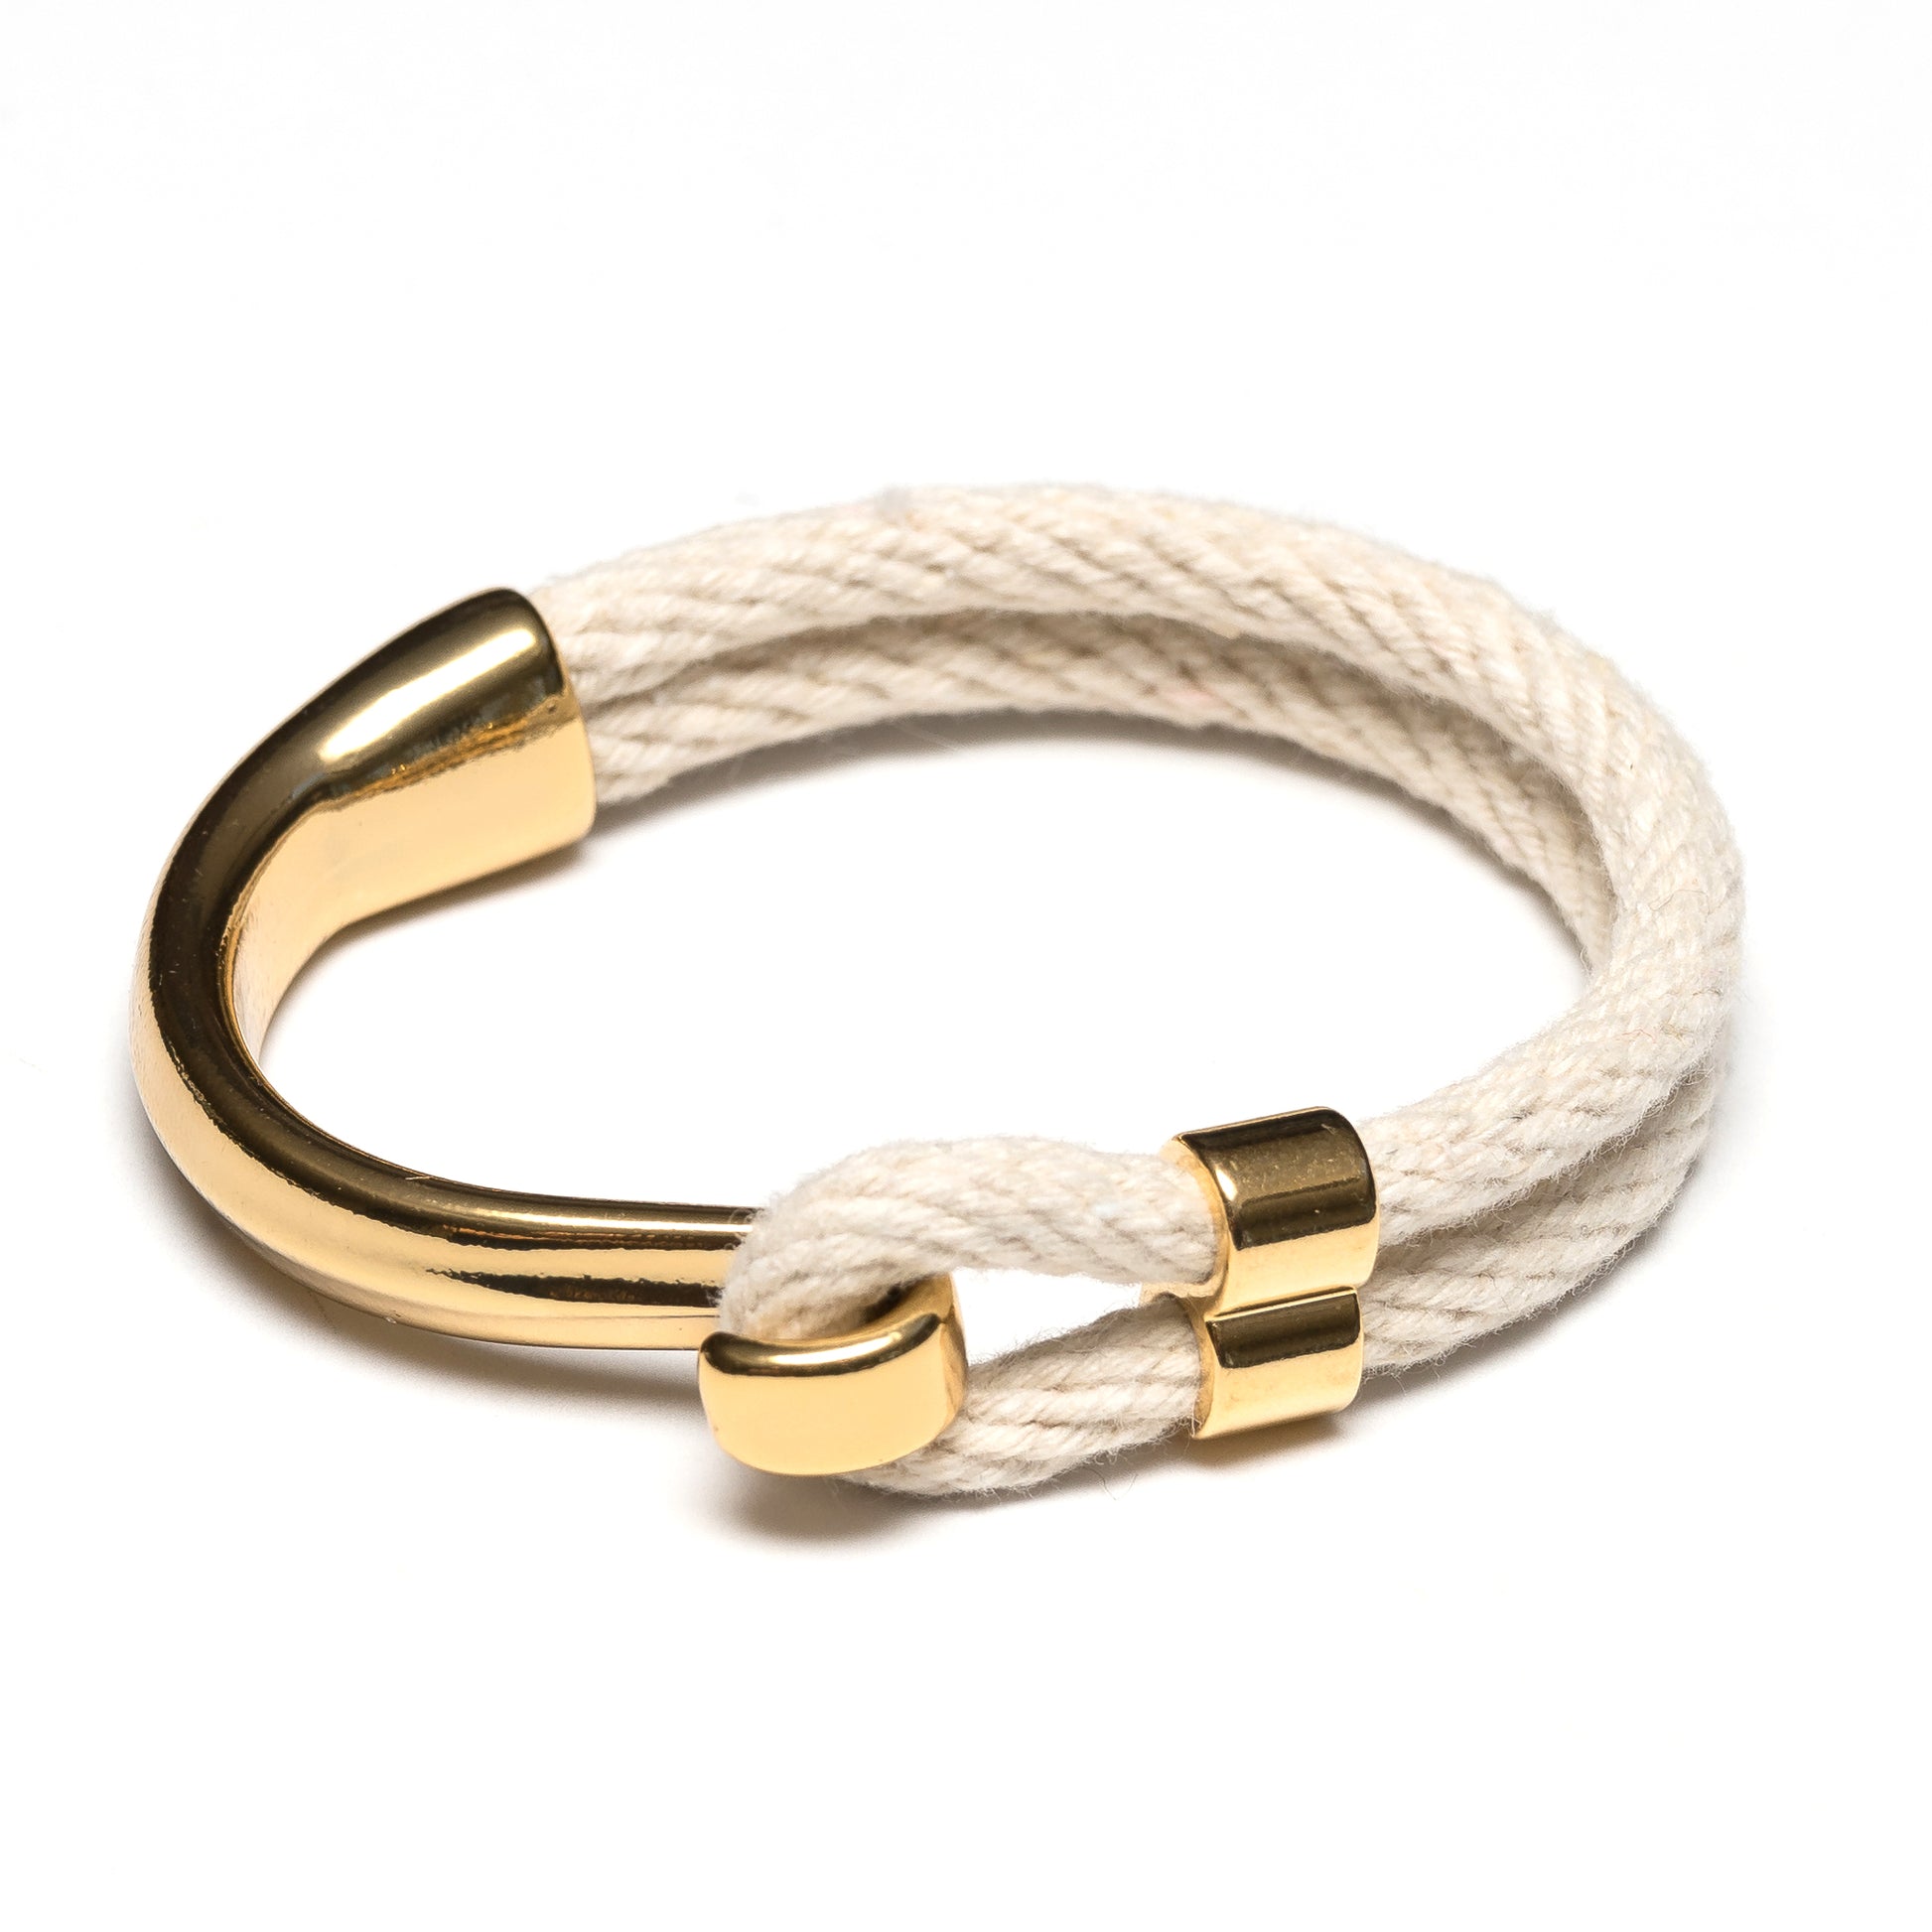 Ivory rope bracelet with gold hook closure